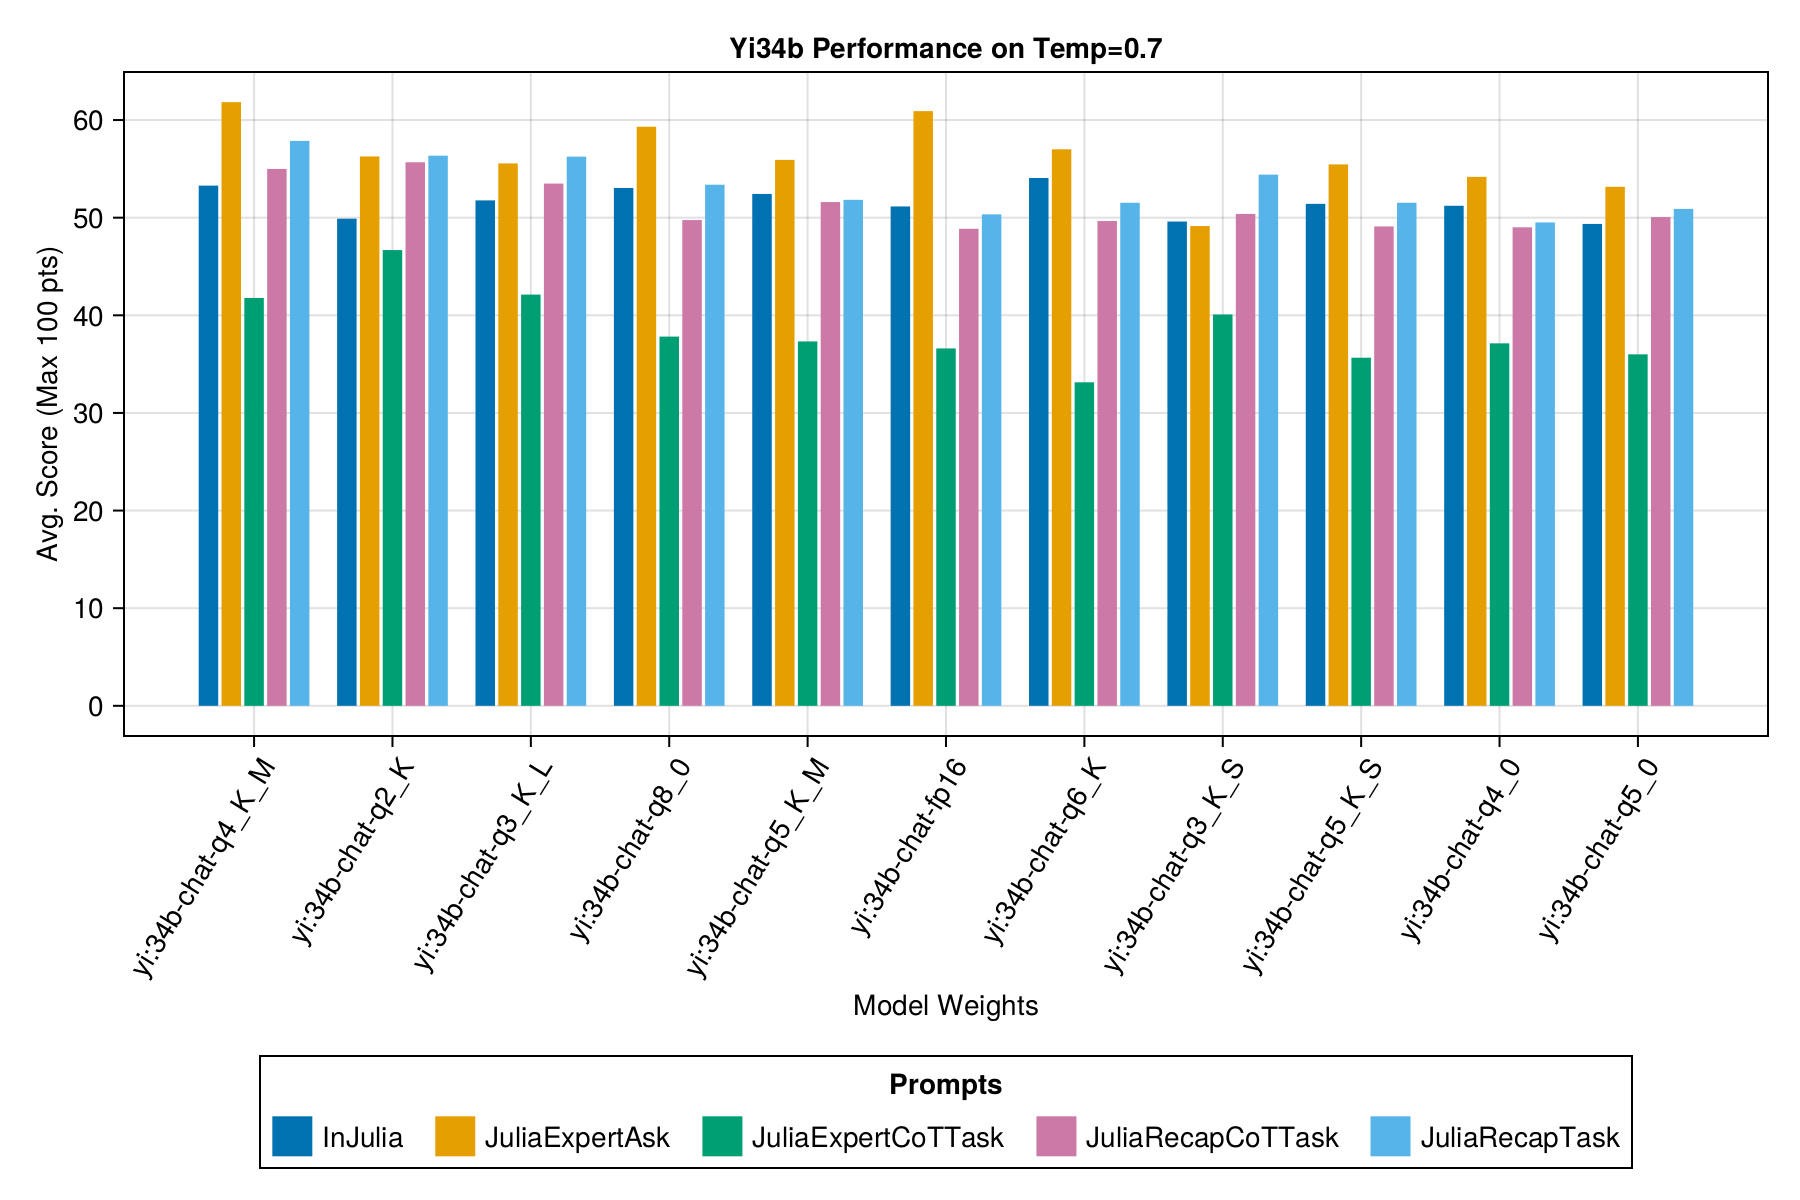 Yi34b comparison default temperature